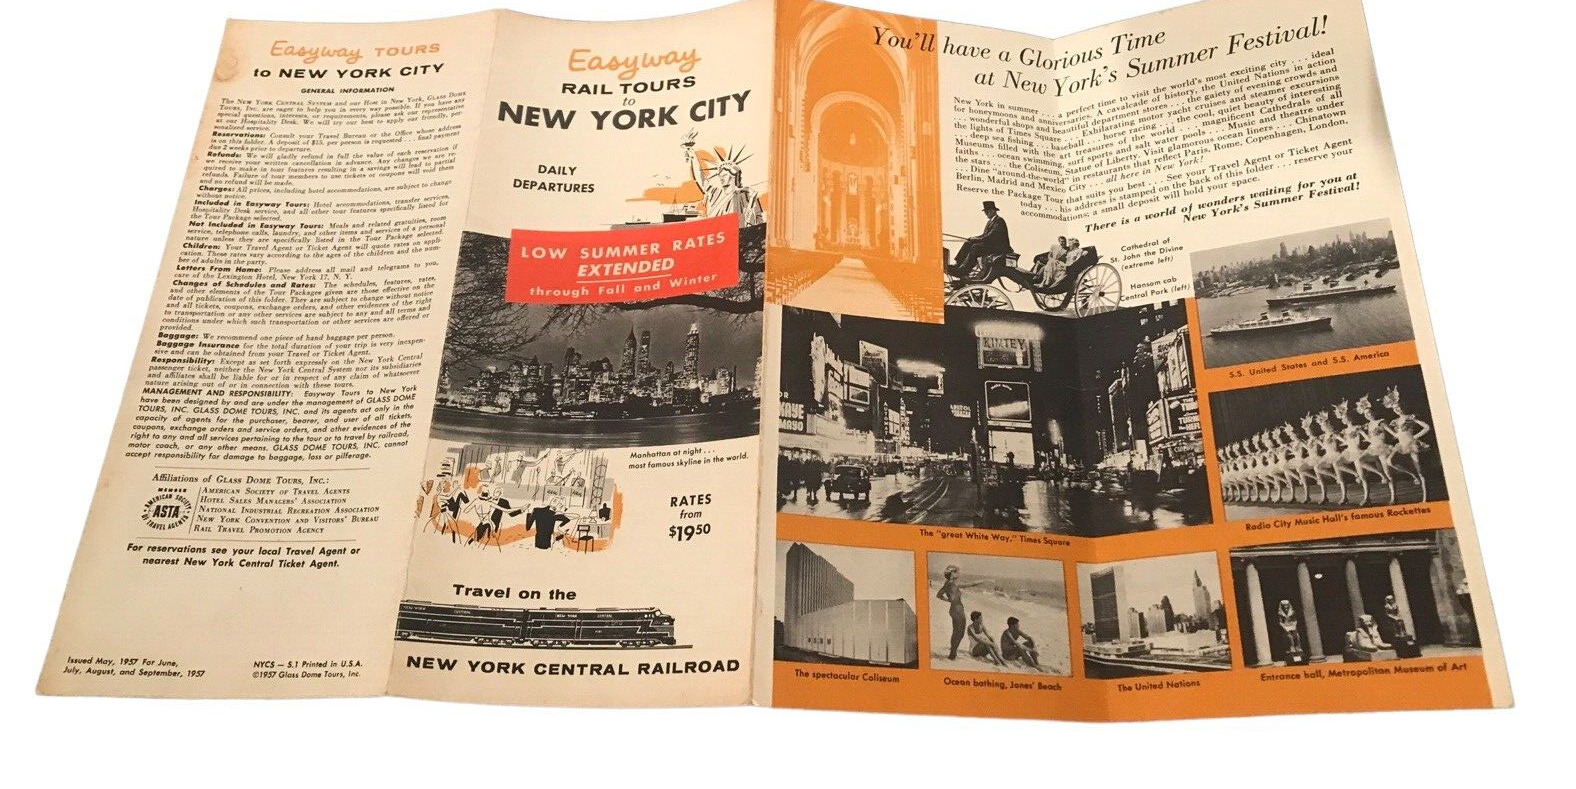 Vintage Railroad Ephemera 1957 EASYWAY RAIL TOURS TO NEW YORK CITY Brochure